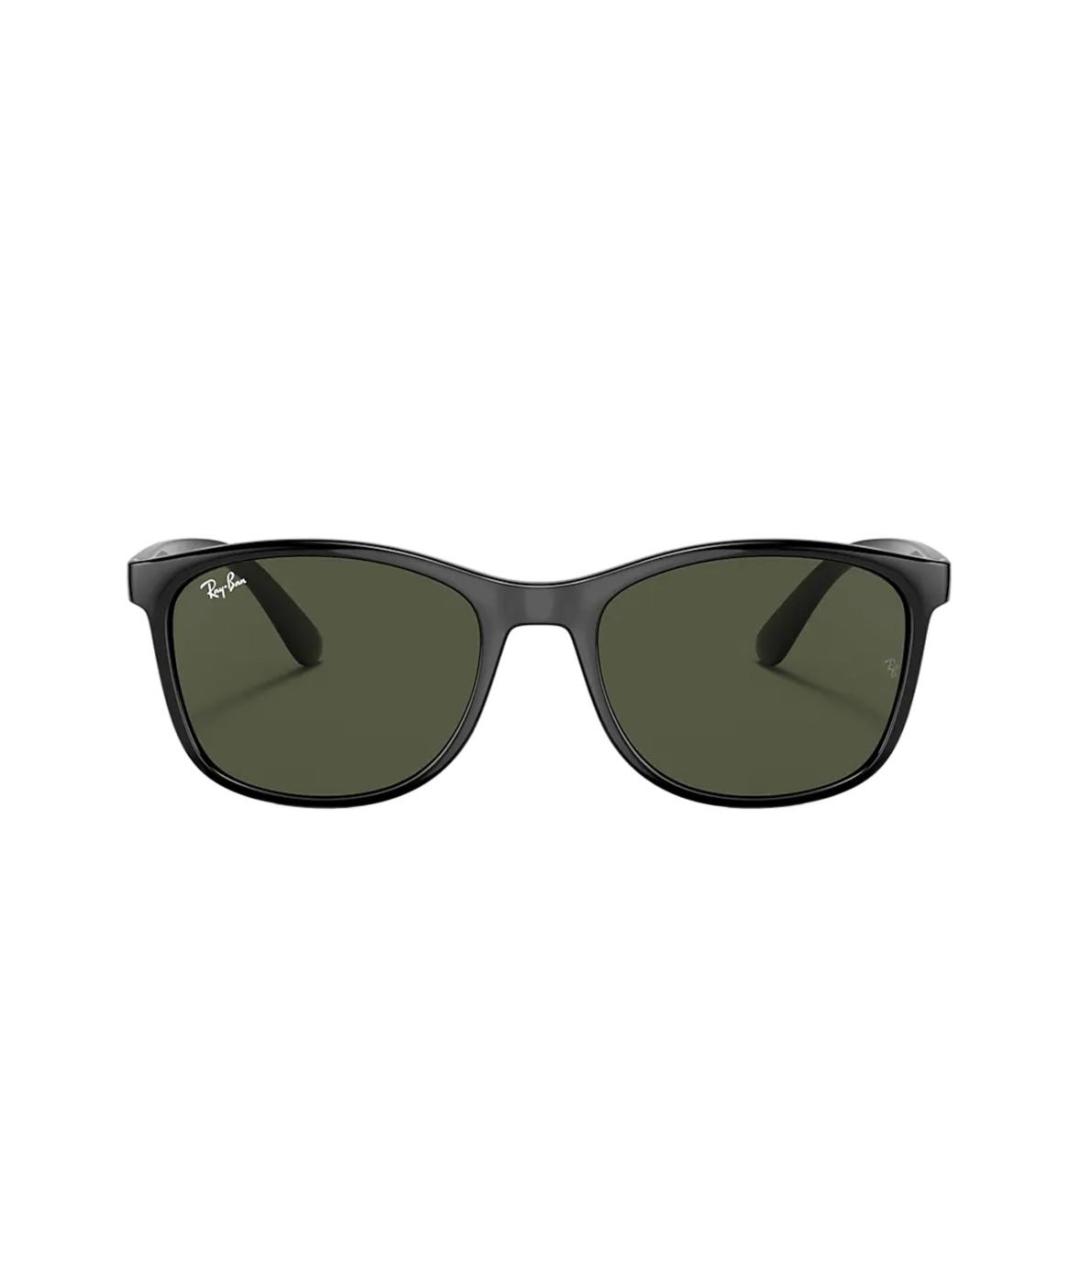 RAY BAN Зеленые солнцезащитные очки, фото 1